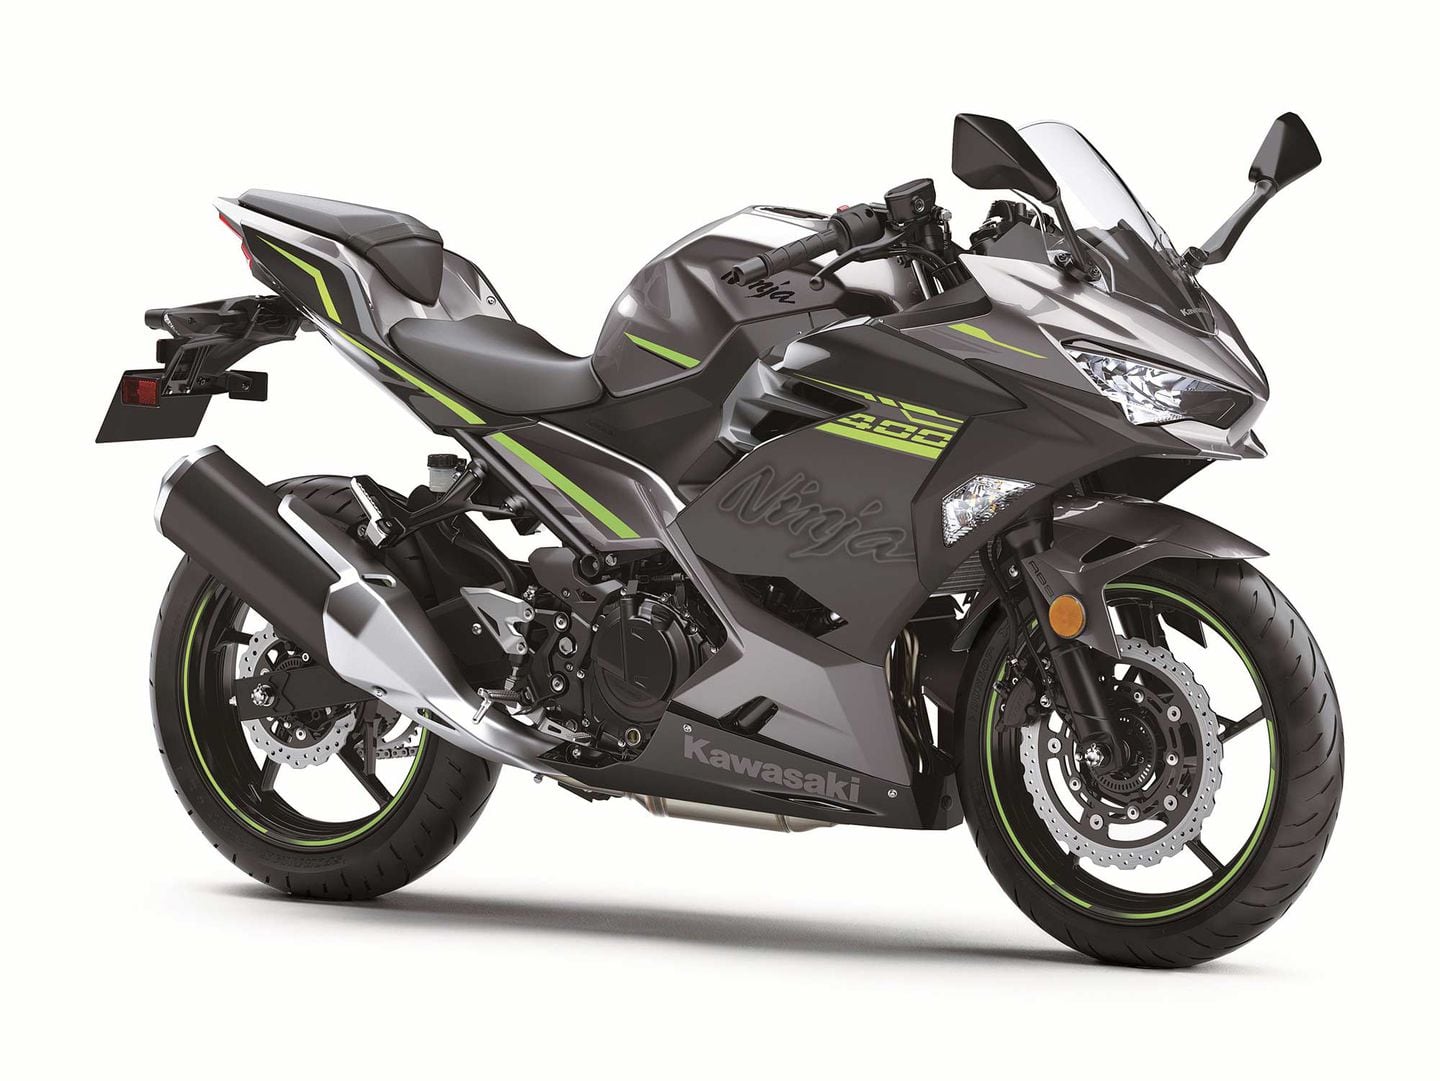 2021 Kawasaki Ninja 400 Buyer's Guide: Specs, Photos, Price ...